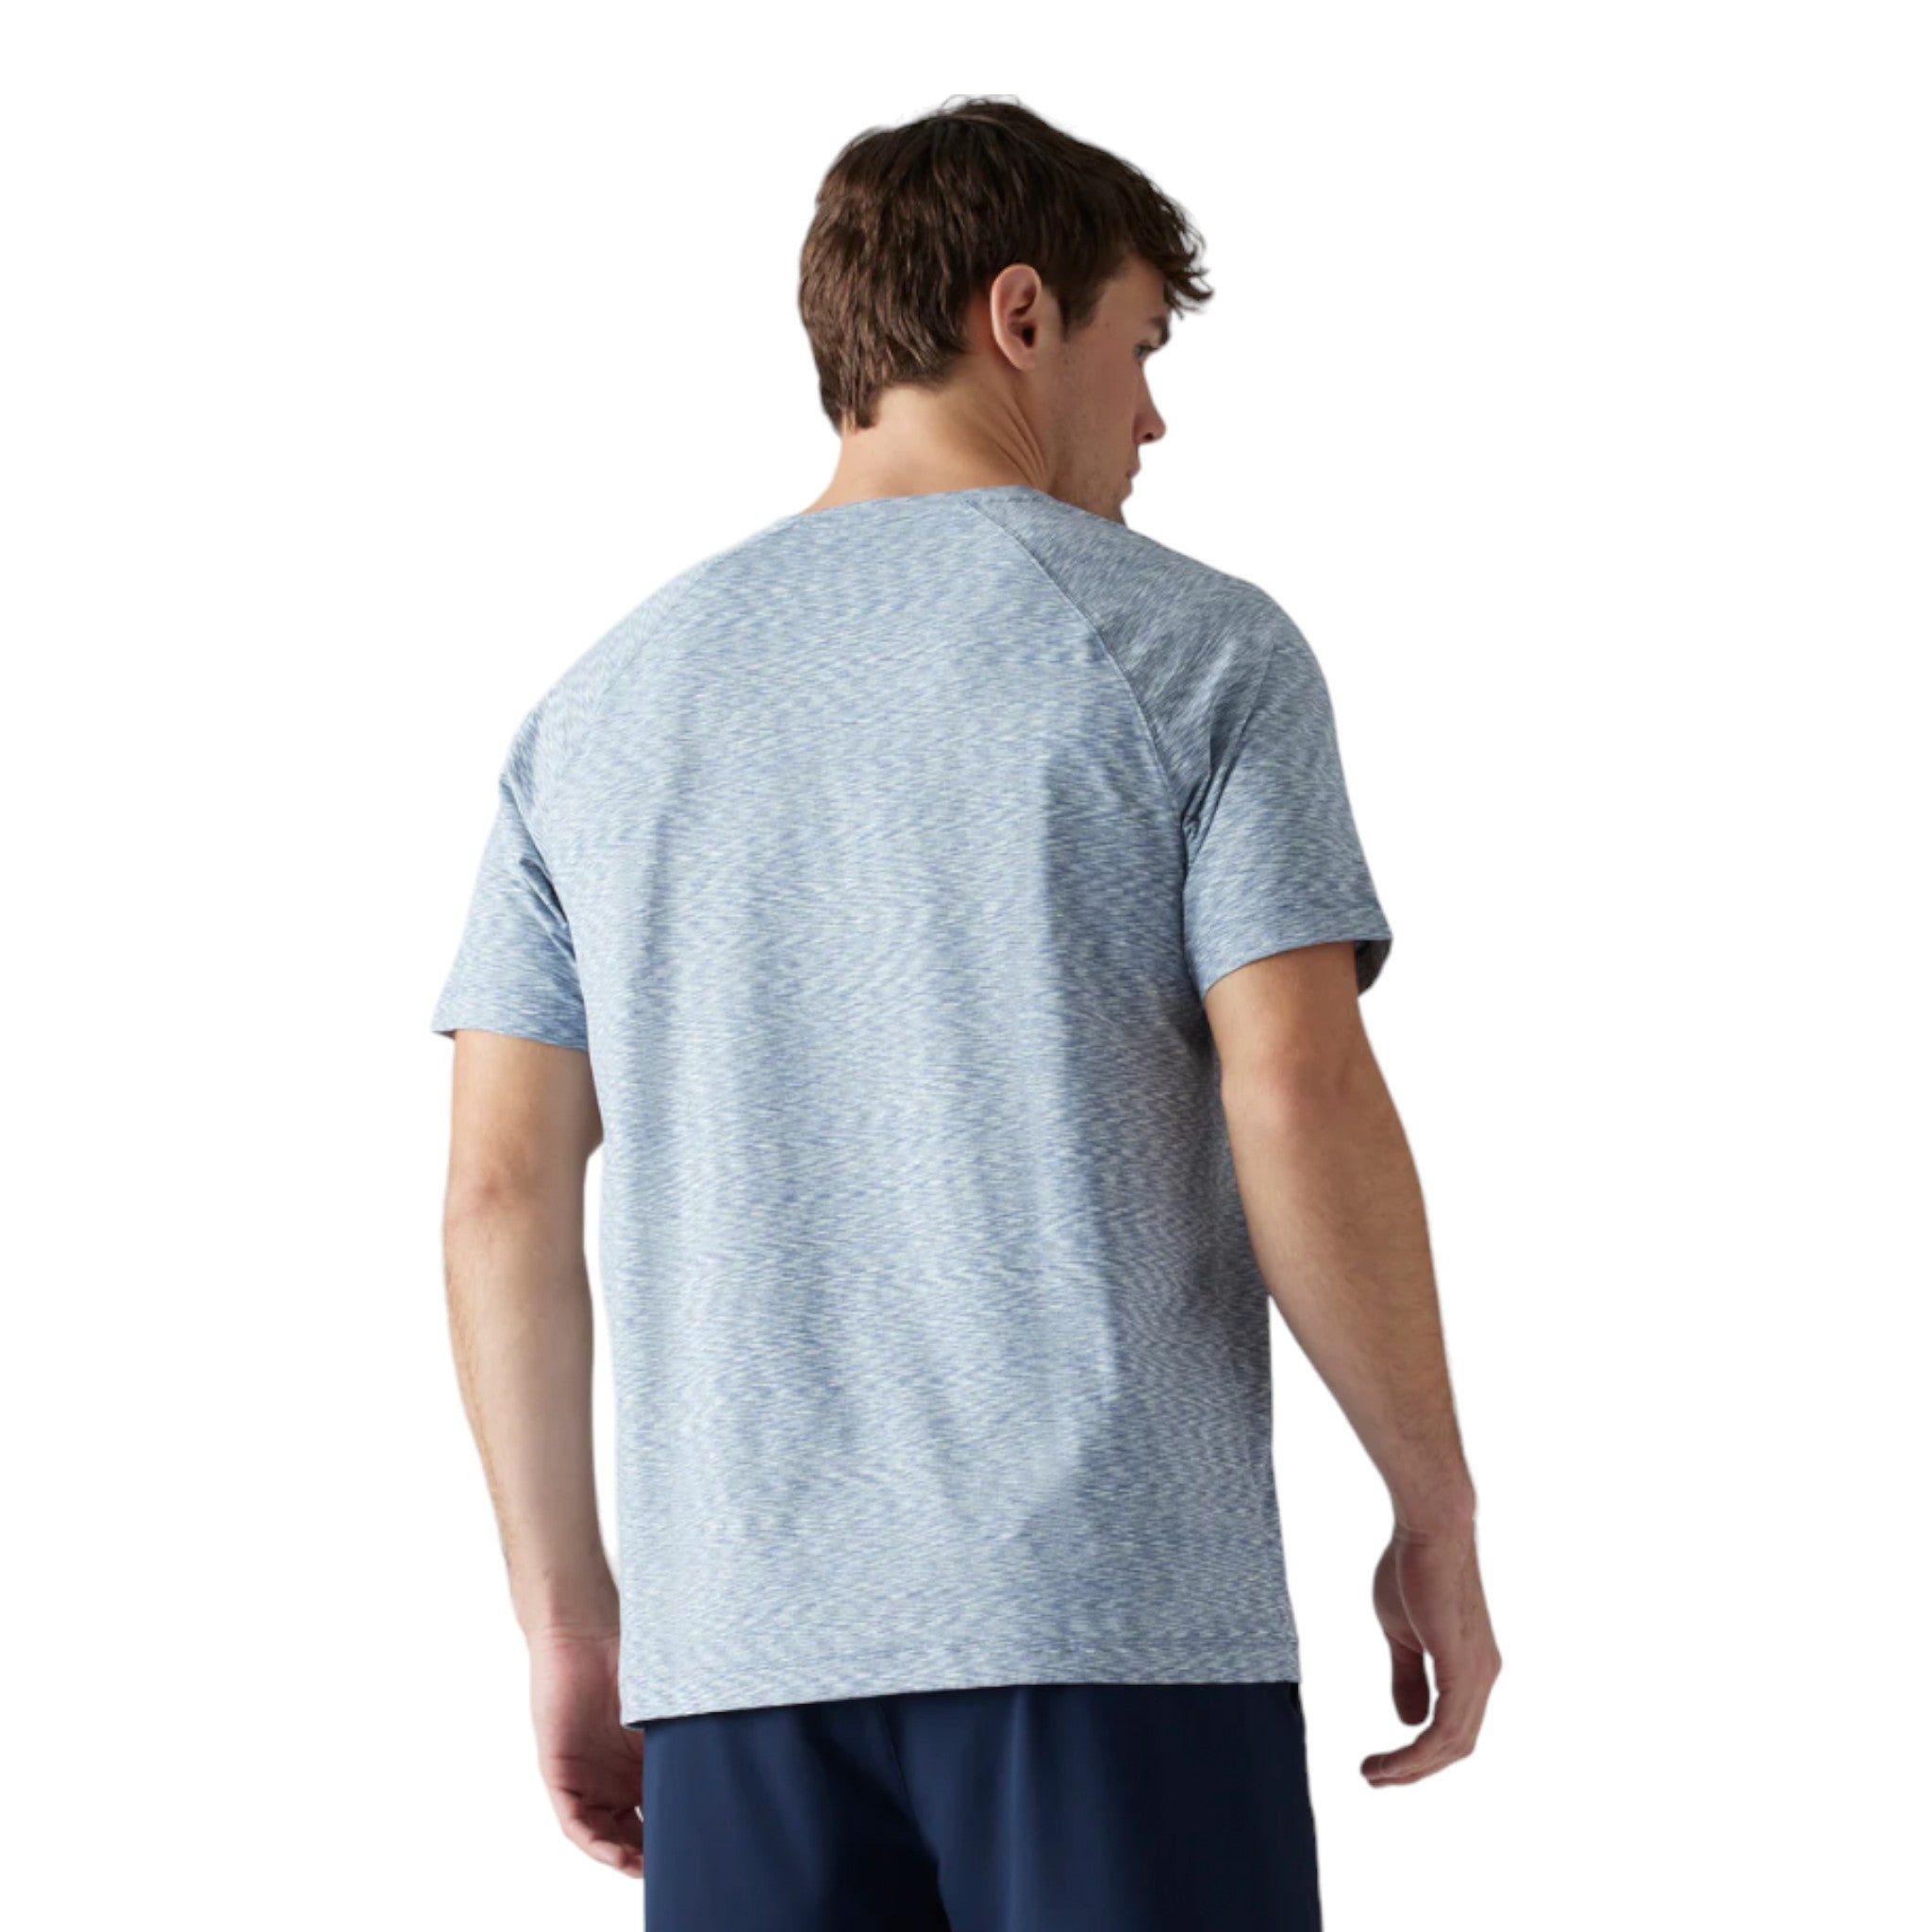 Rhone - Reign Short Sleeve T-Shirt - True Blue / Aquamarine Space Dye